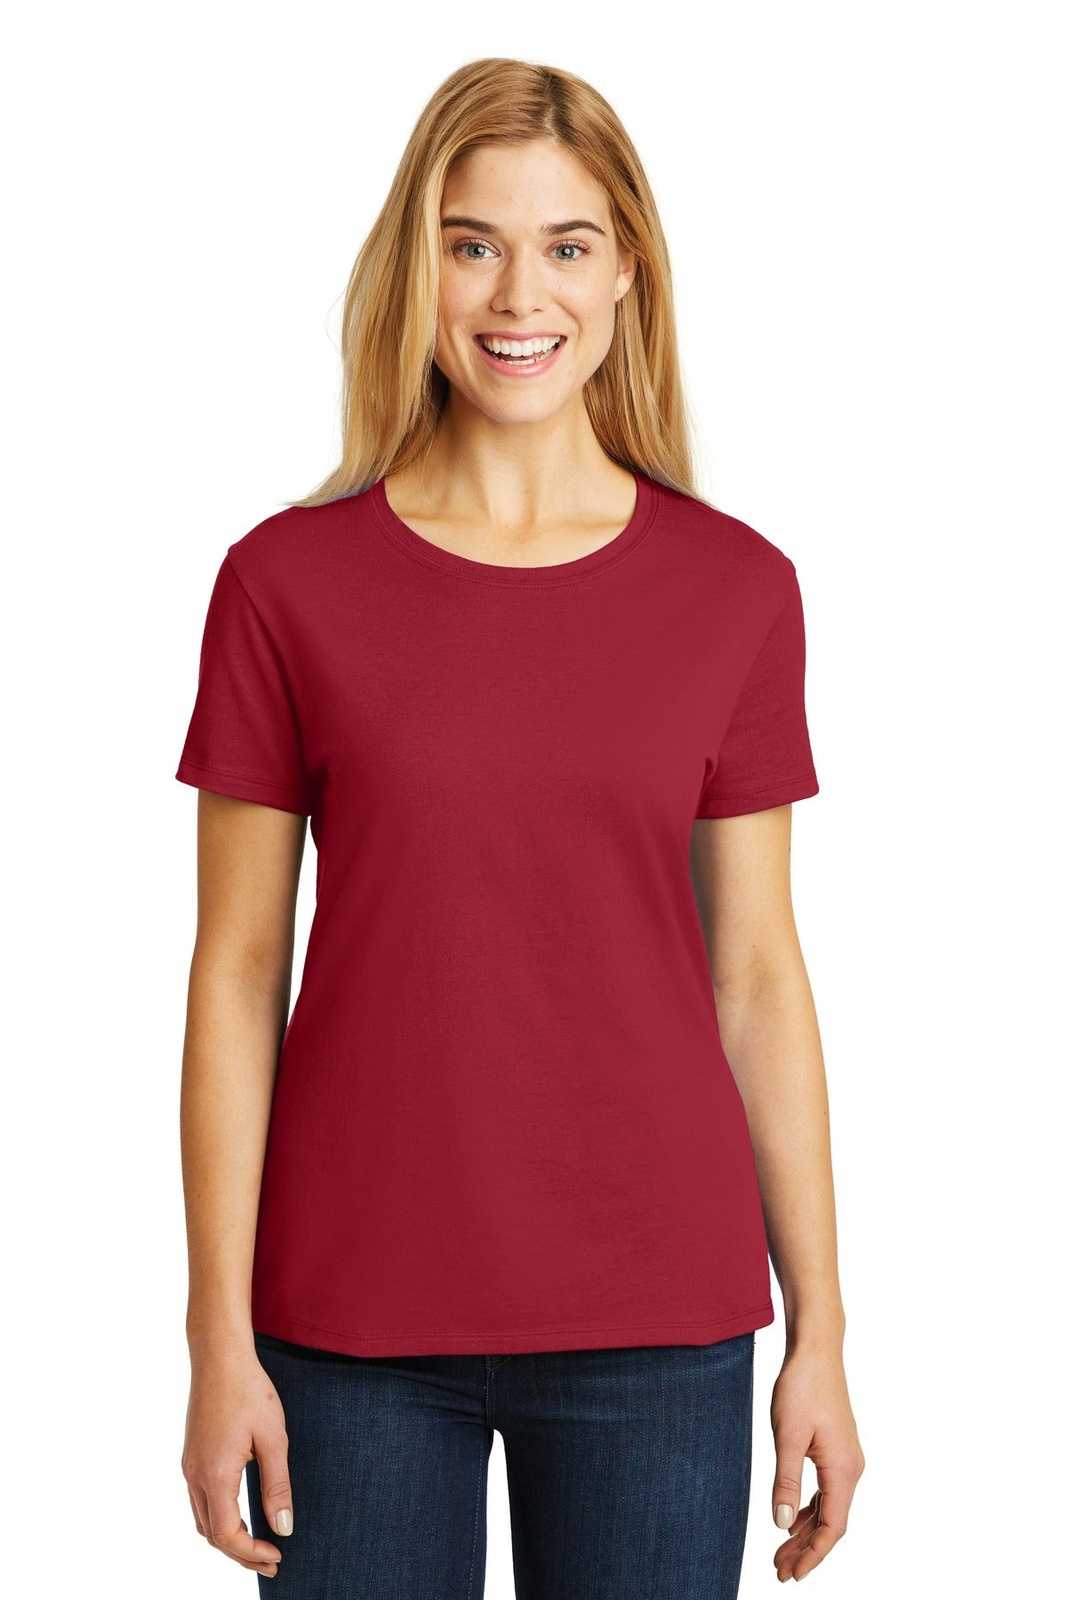 Hanes SL04 Ladies Nano-T Cotton T-Shirt - Deep Red - HIT a Double